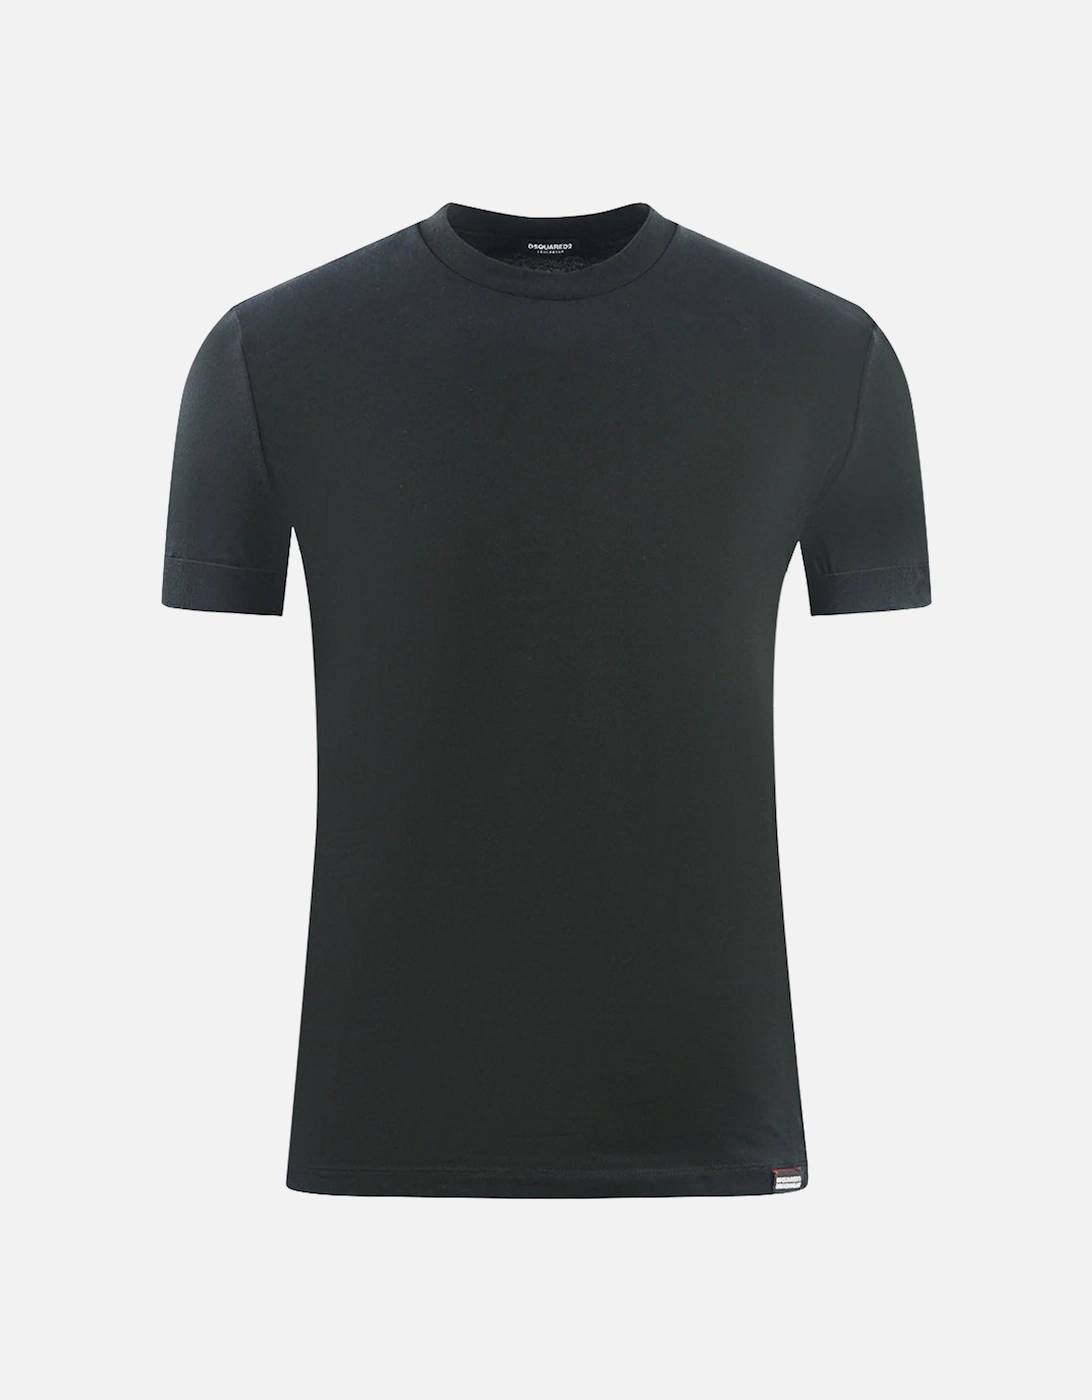 Bold Brand Logo on Sleeve Black Underwear T-Shirt, 4 of 3